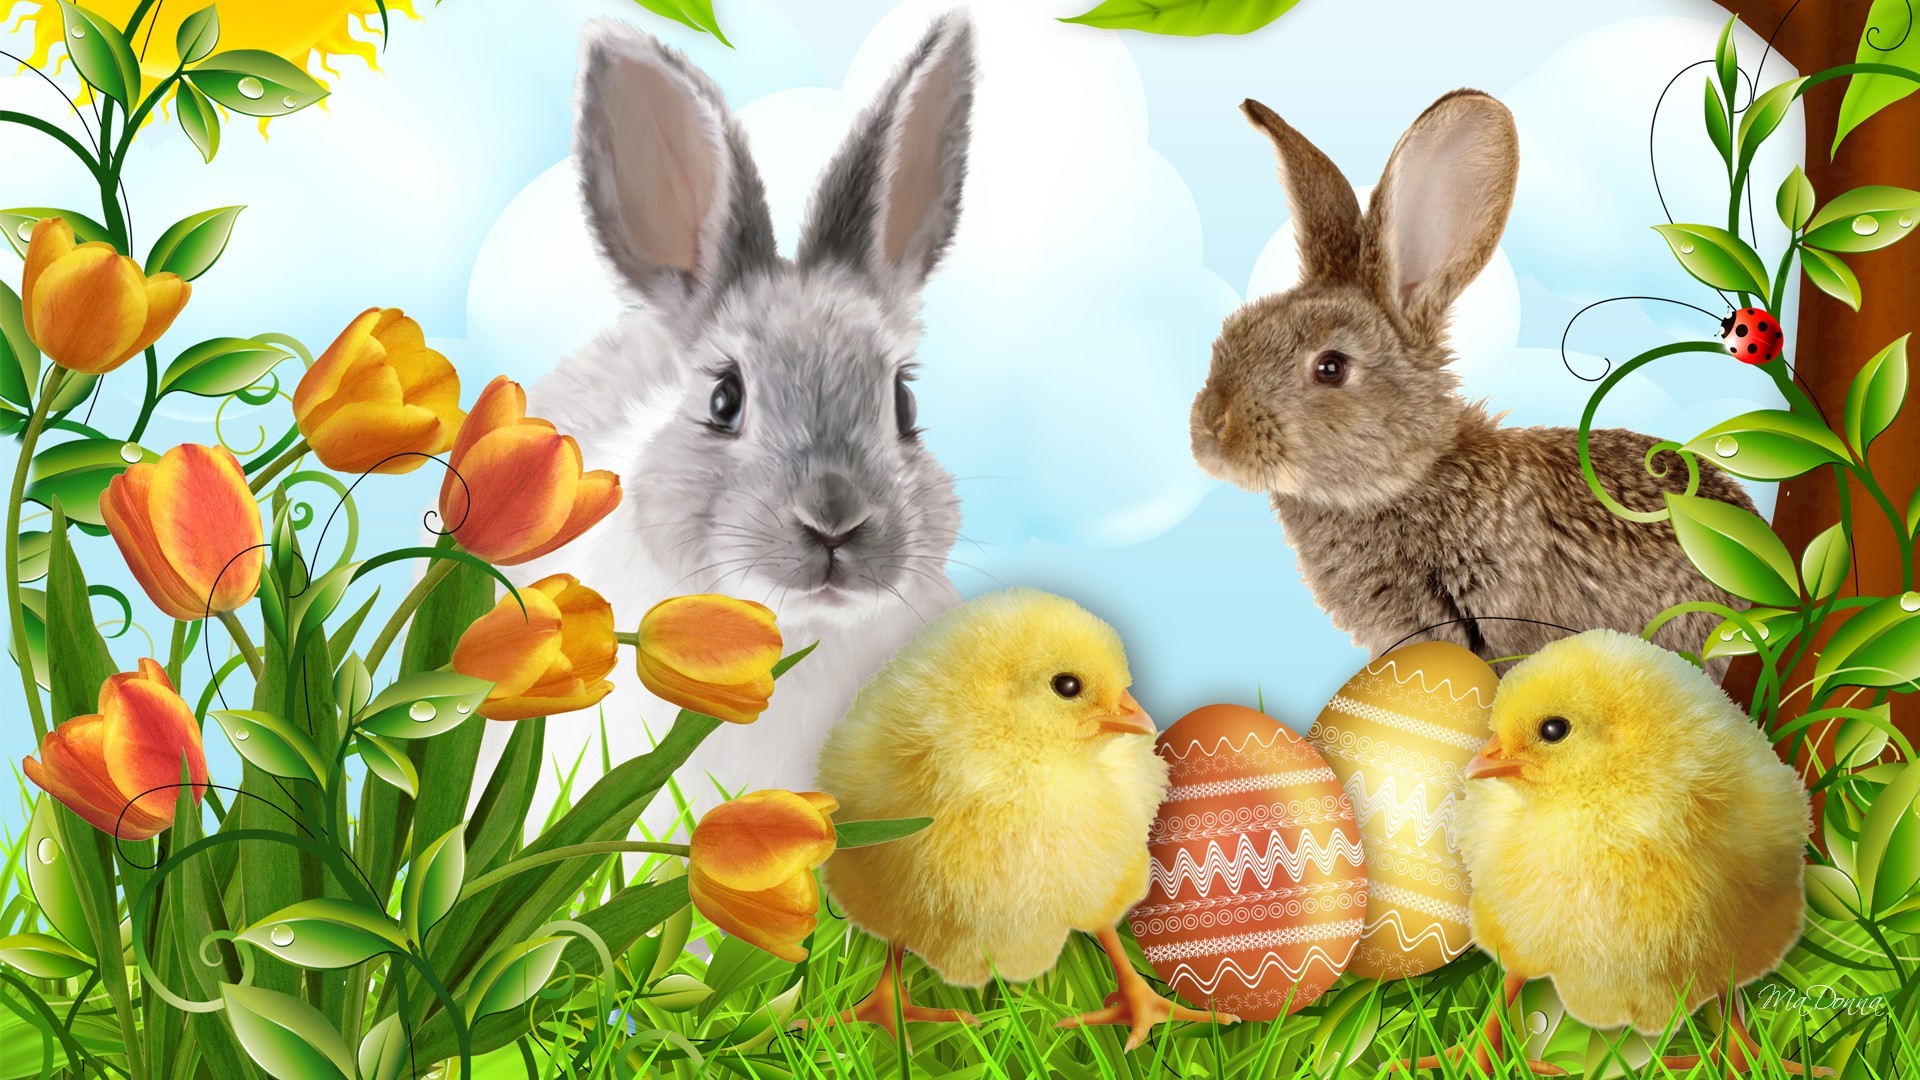 1920x1080 ... Easter Bunny Desktop Wallpapers – Happy Easter 2017 35 Cute ...